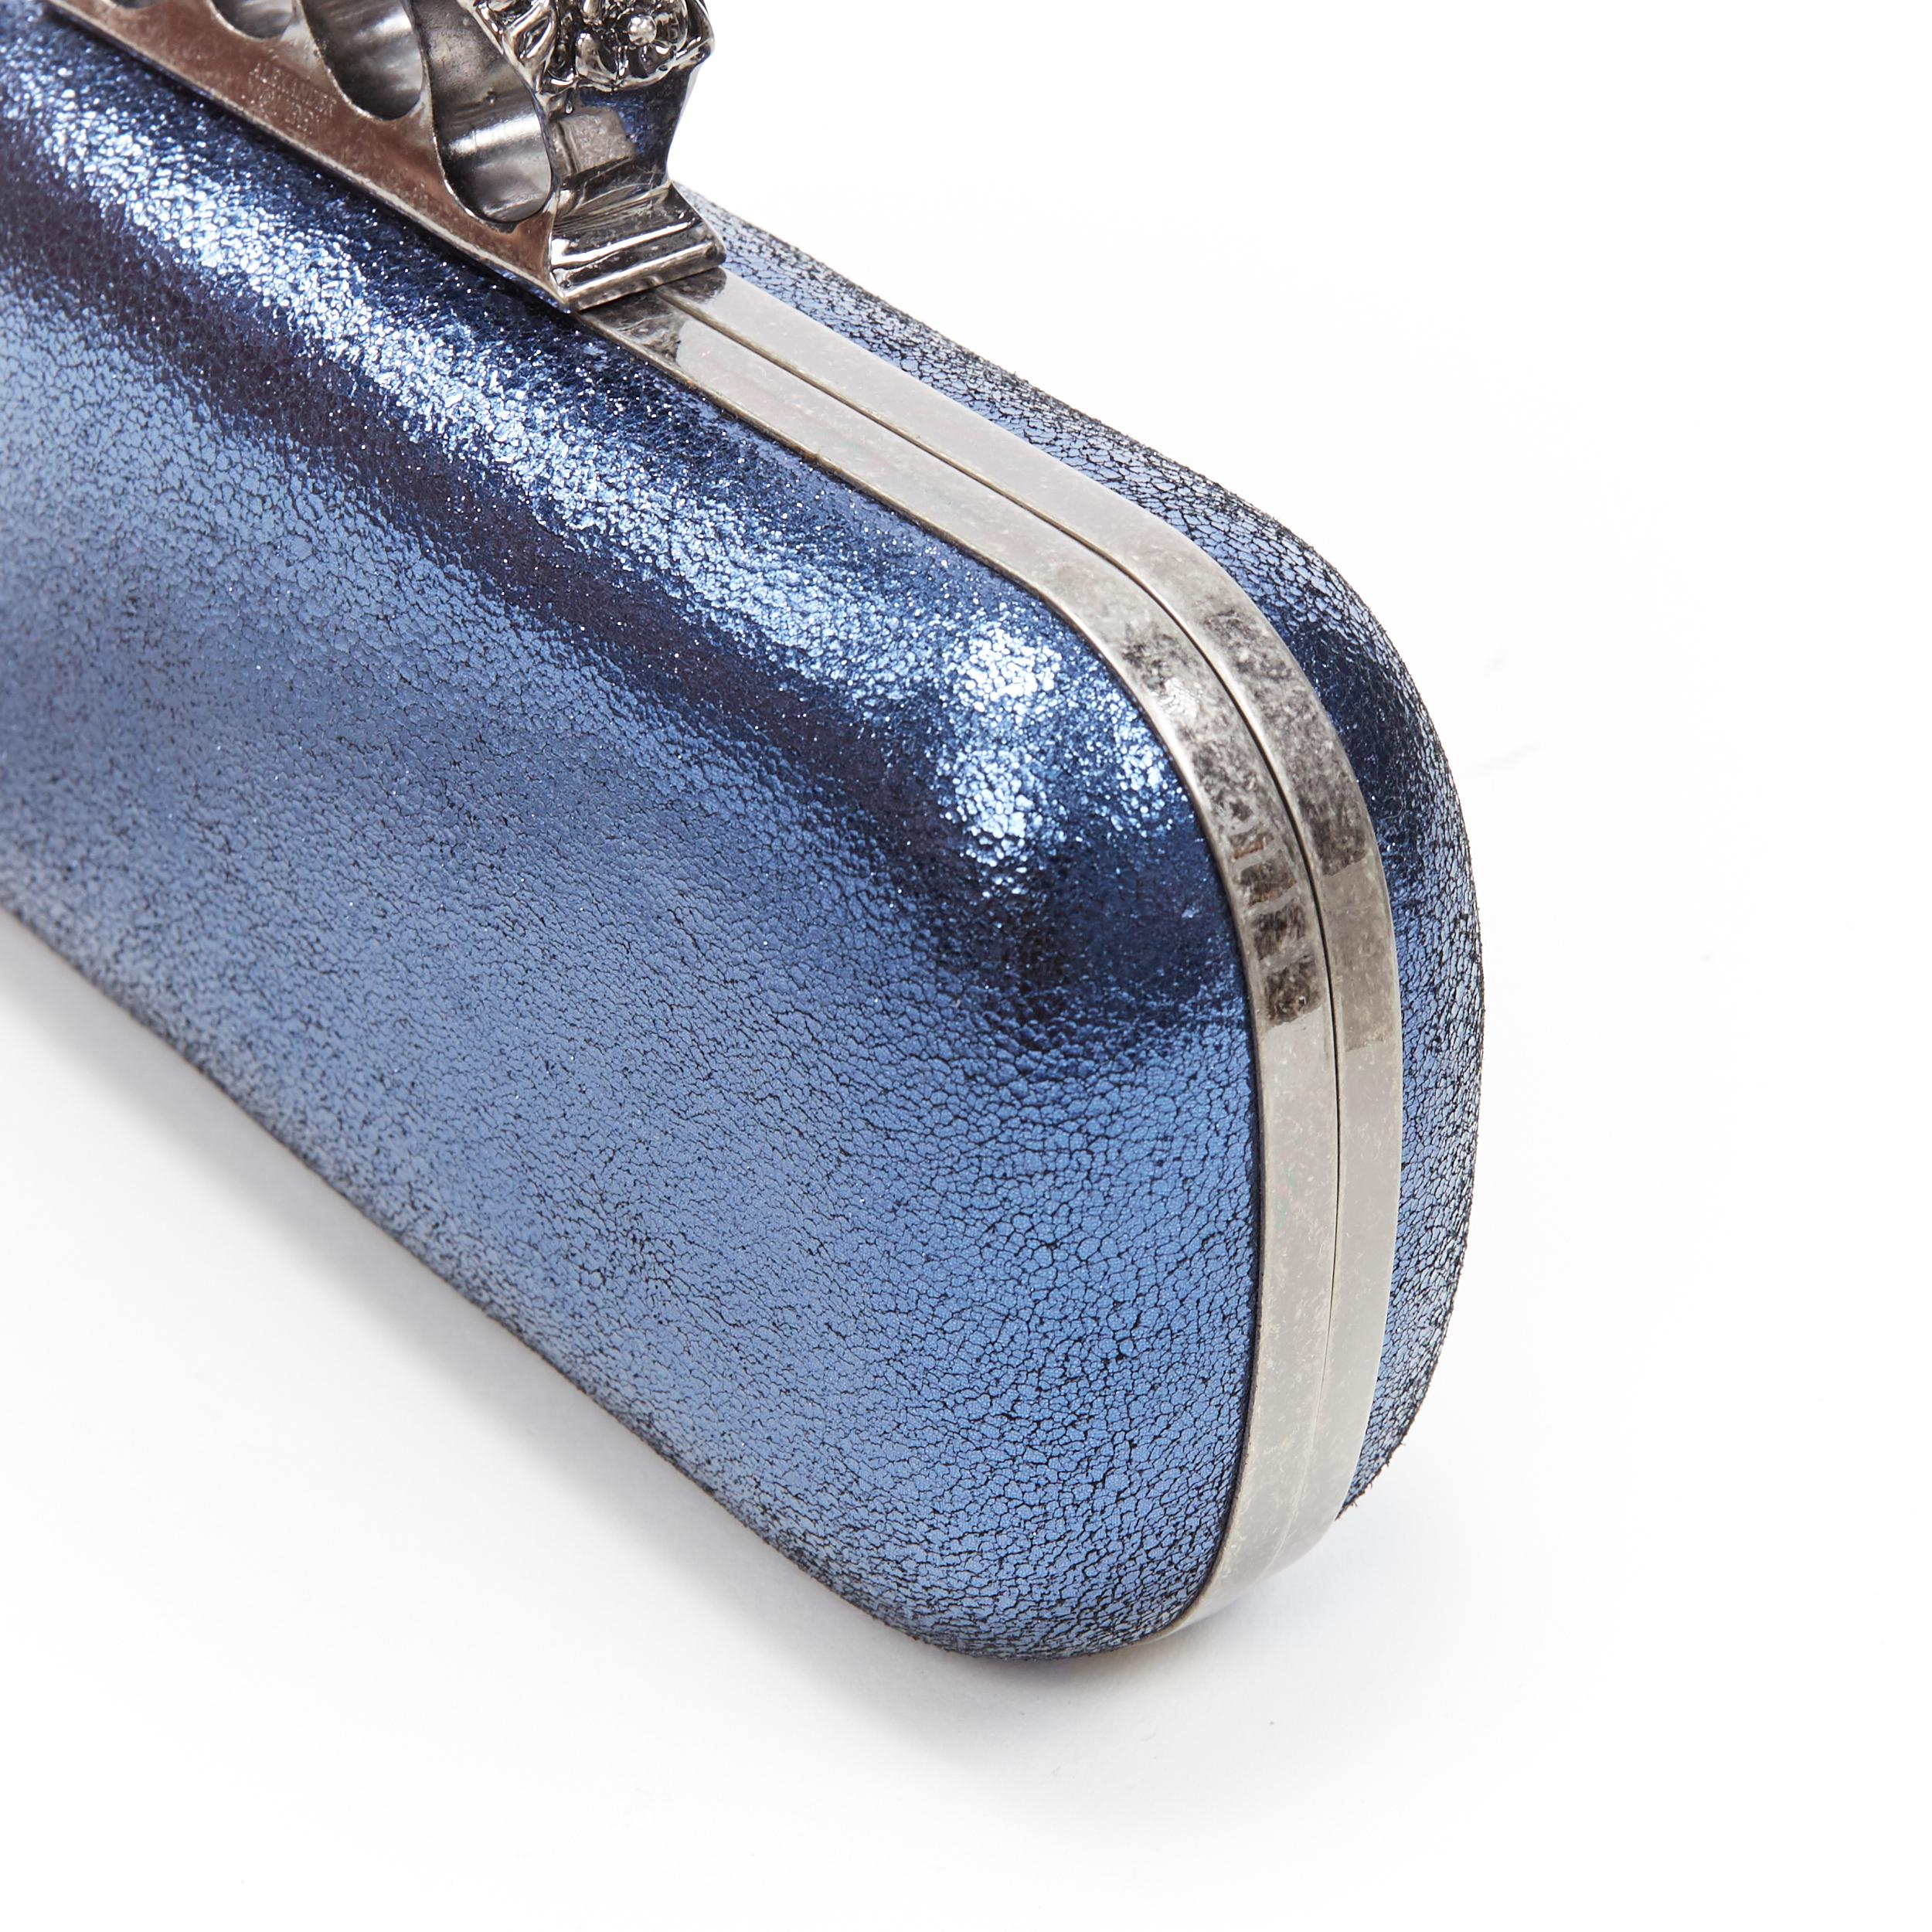 ALEXANDER MCQUEEN metallic blue leather 4-ring skull knuckleduster box clutch 4